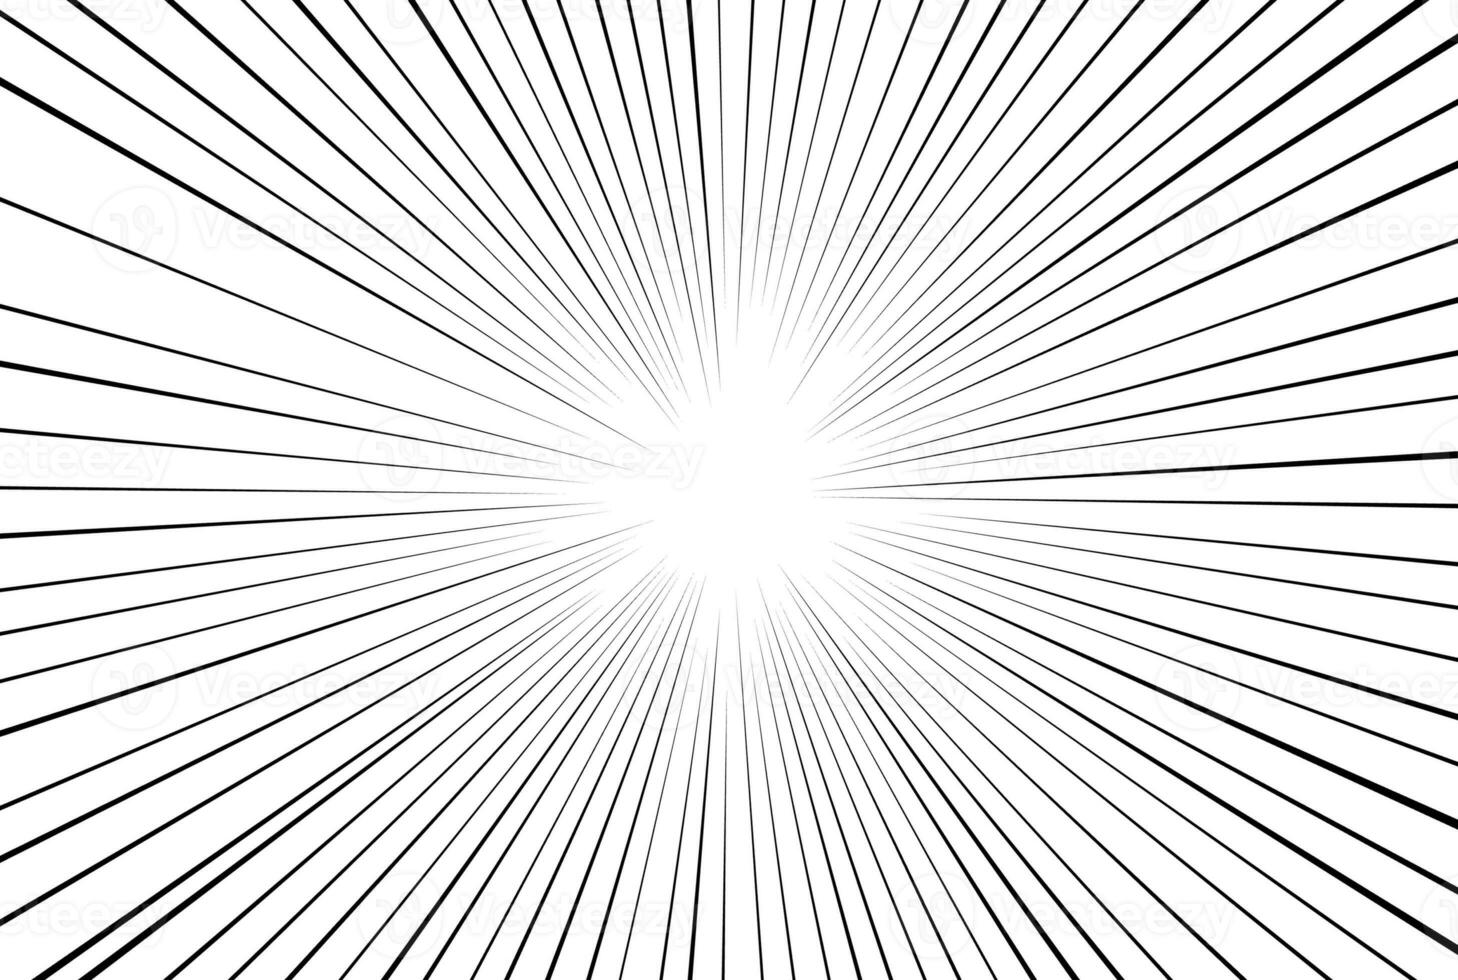 Comic sunburst background ray stripe texture art dynamic motion line wallpaper photo